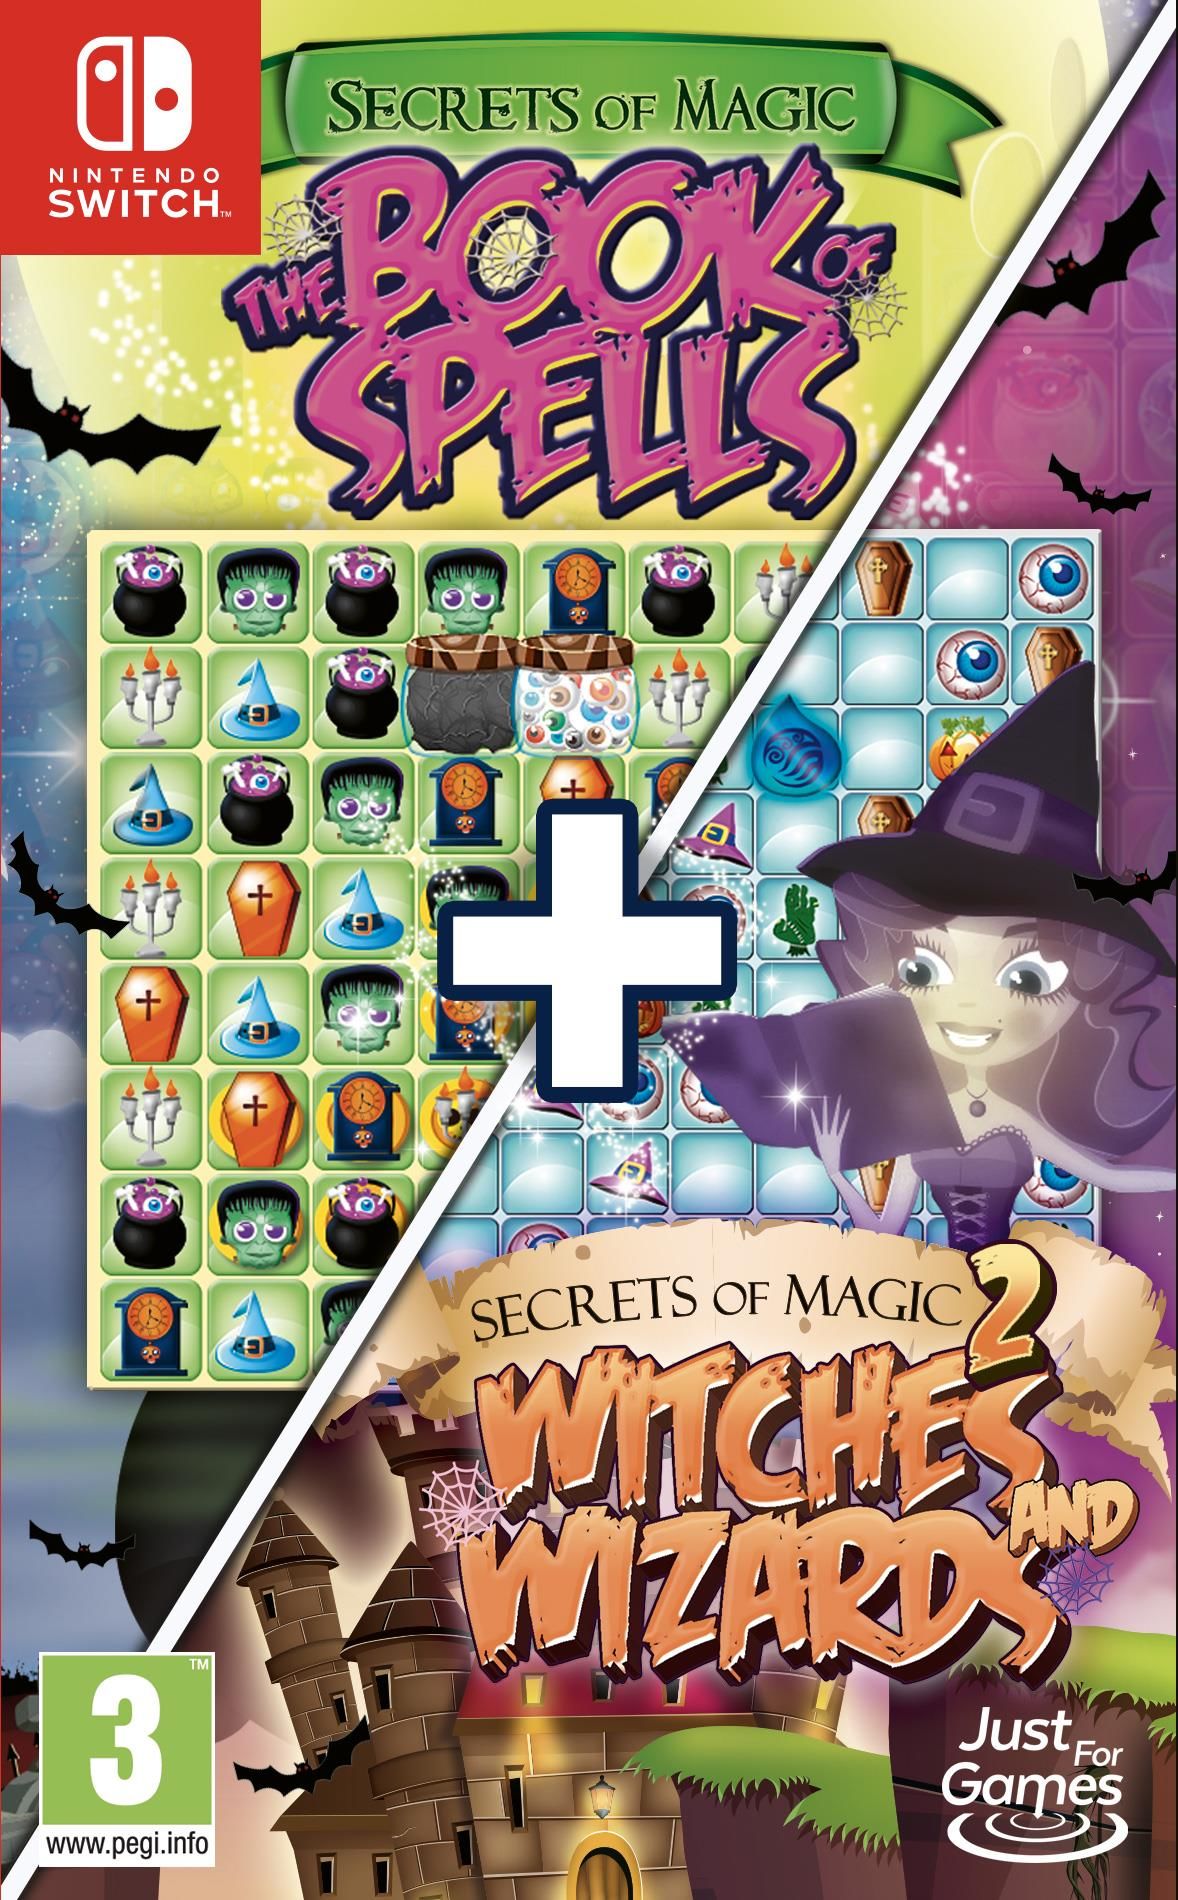 Secrets of Magic : Book of Spells + Secrets of Magic 2 : Witches